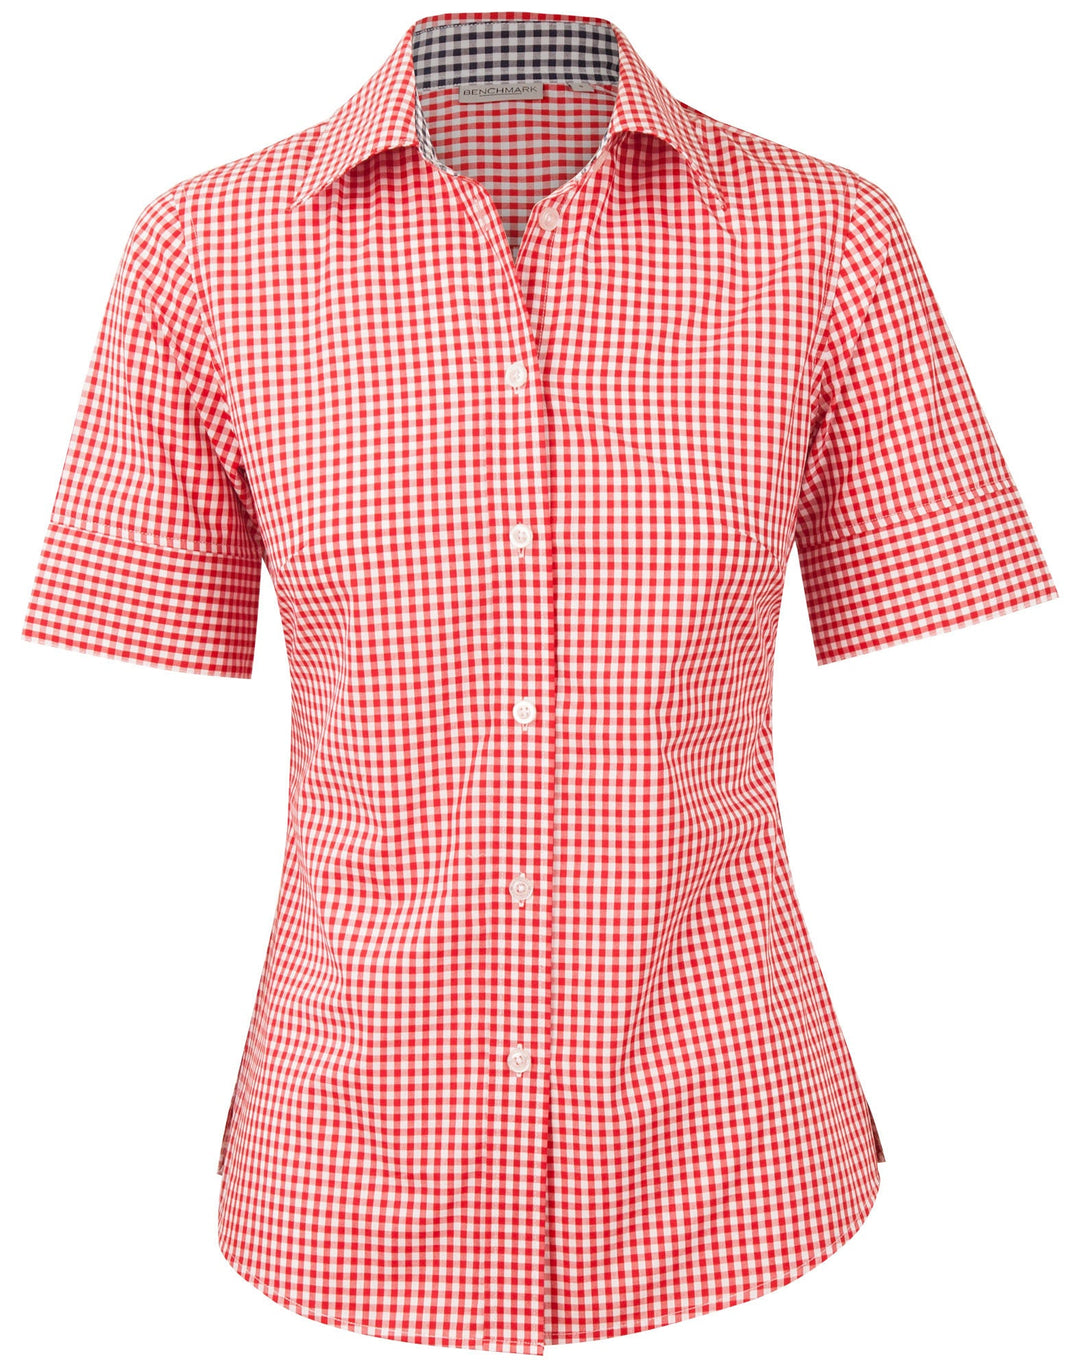 Benchmark M8330S Ladies' Gingham Check Short Sleeve Shirt